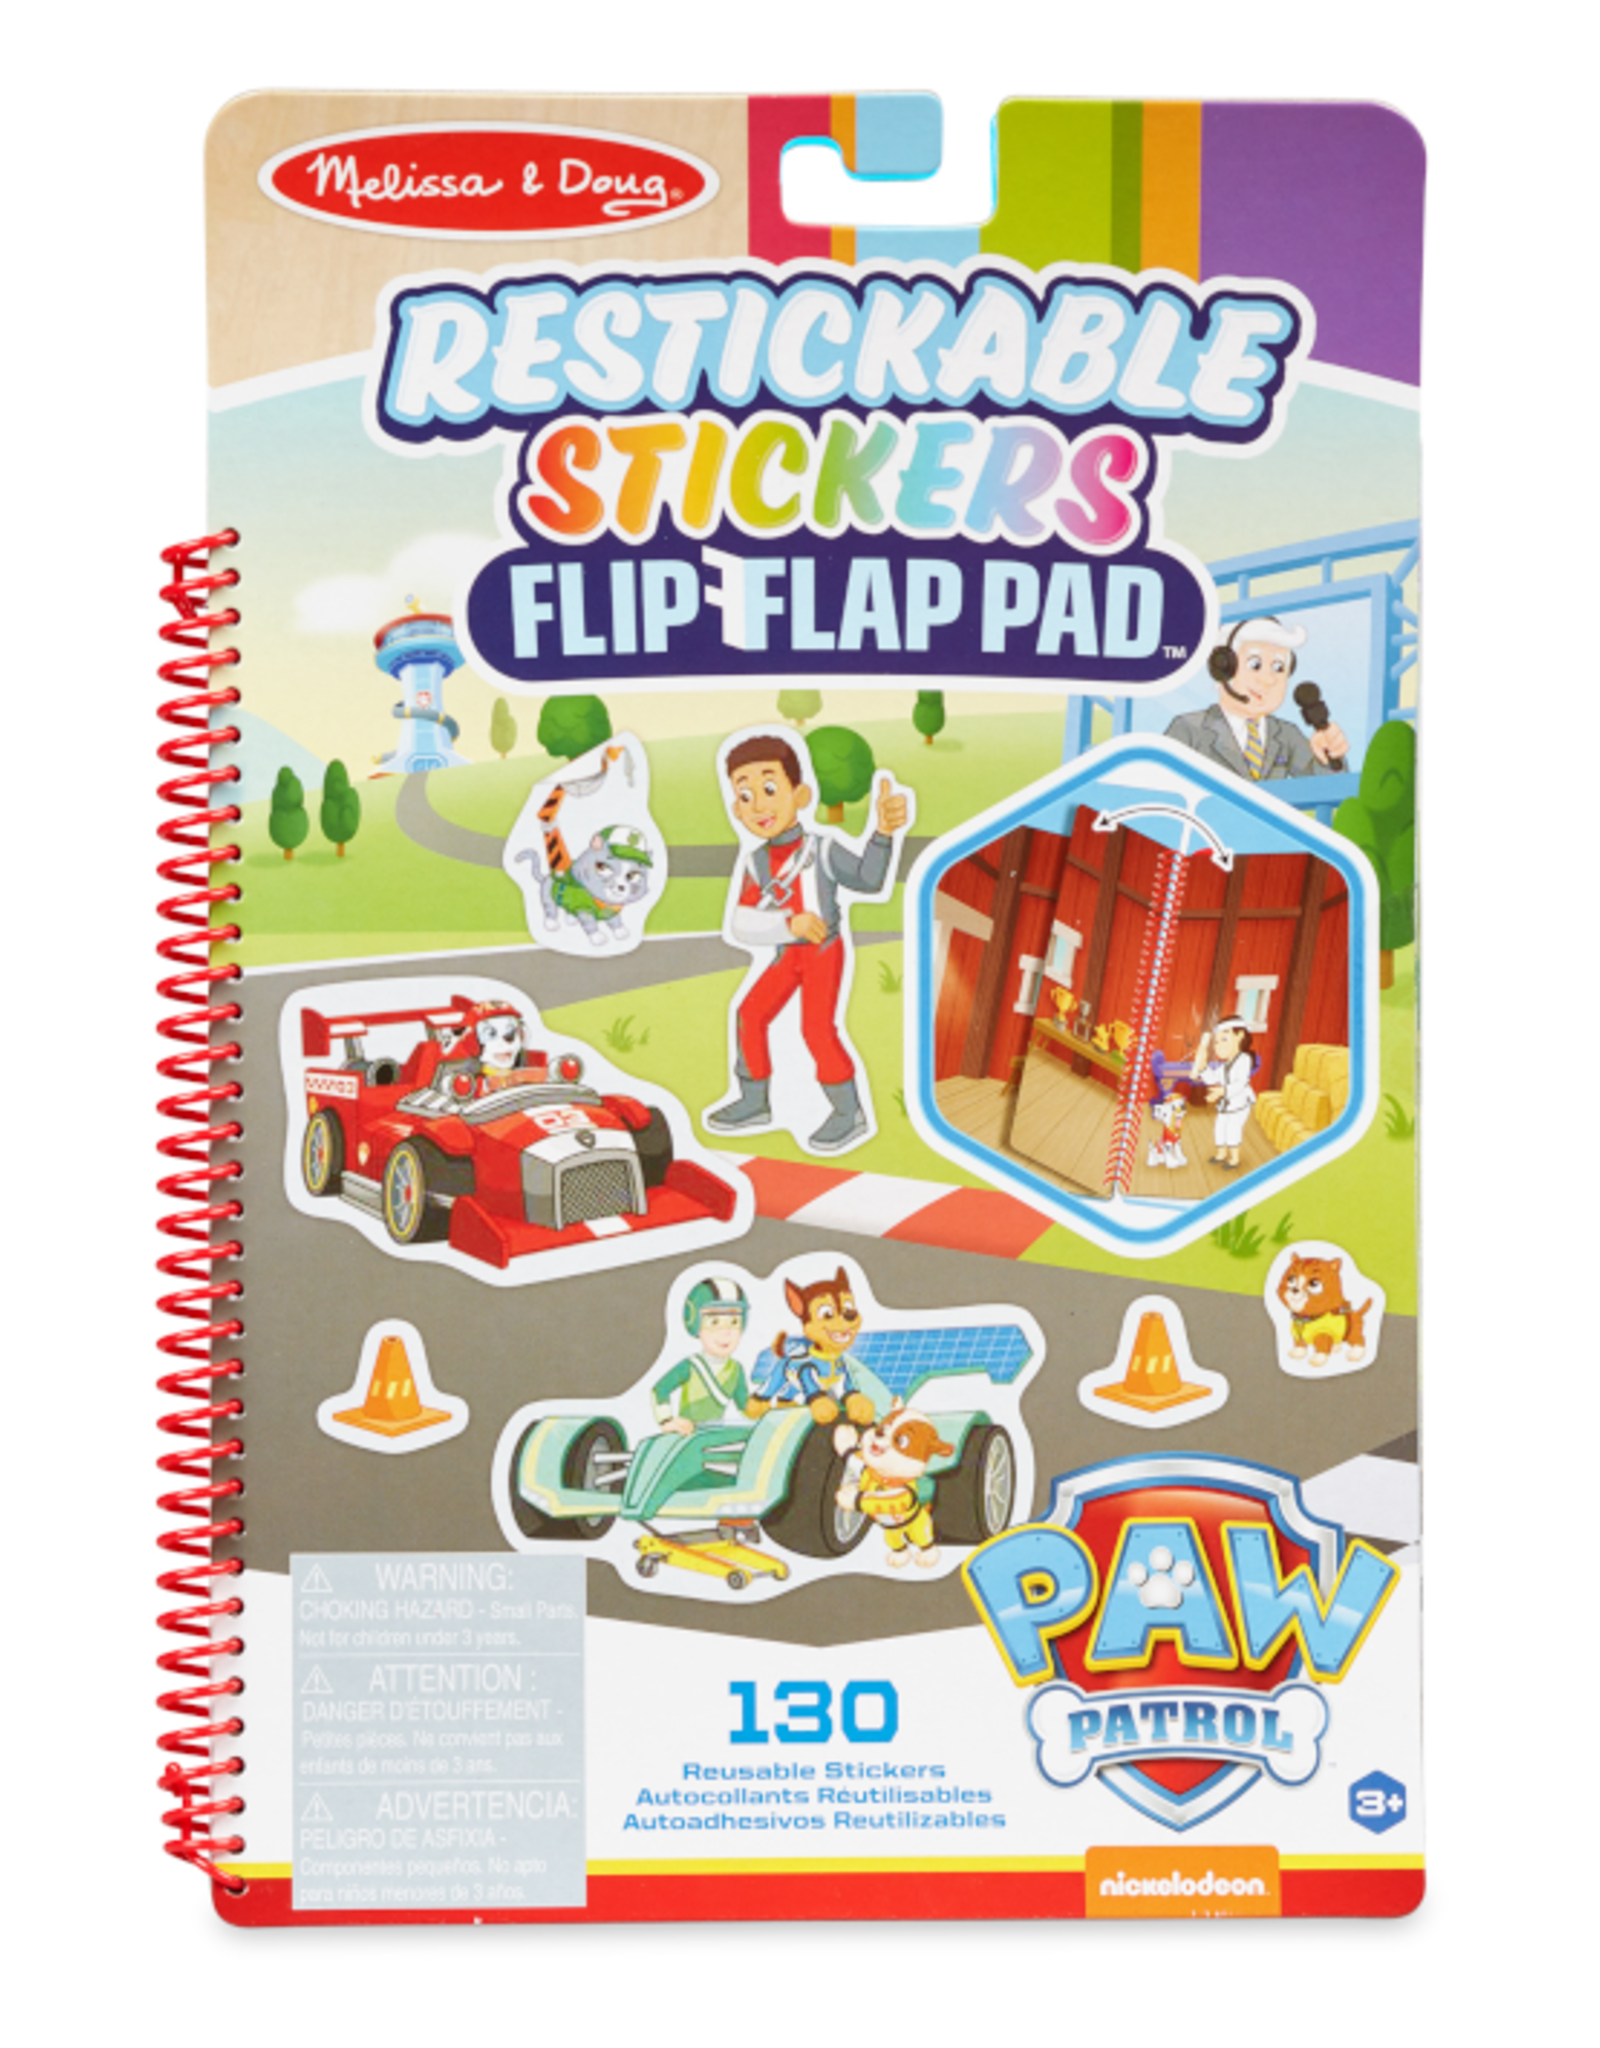 Melissa & Doug PAW Patrol Restickable Stickers Flip-Flap Pad - Classic Missions